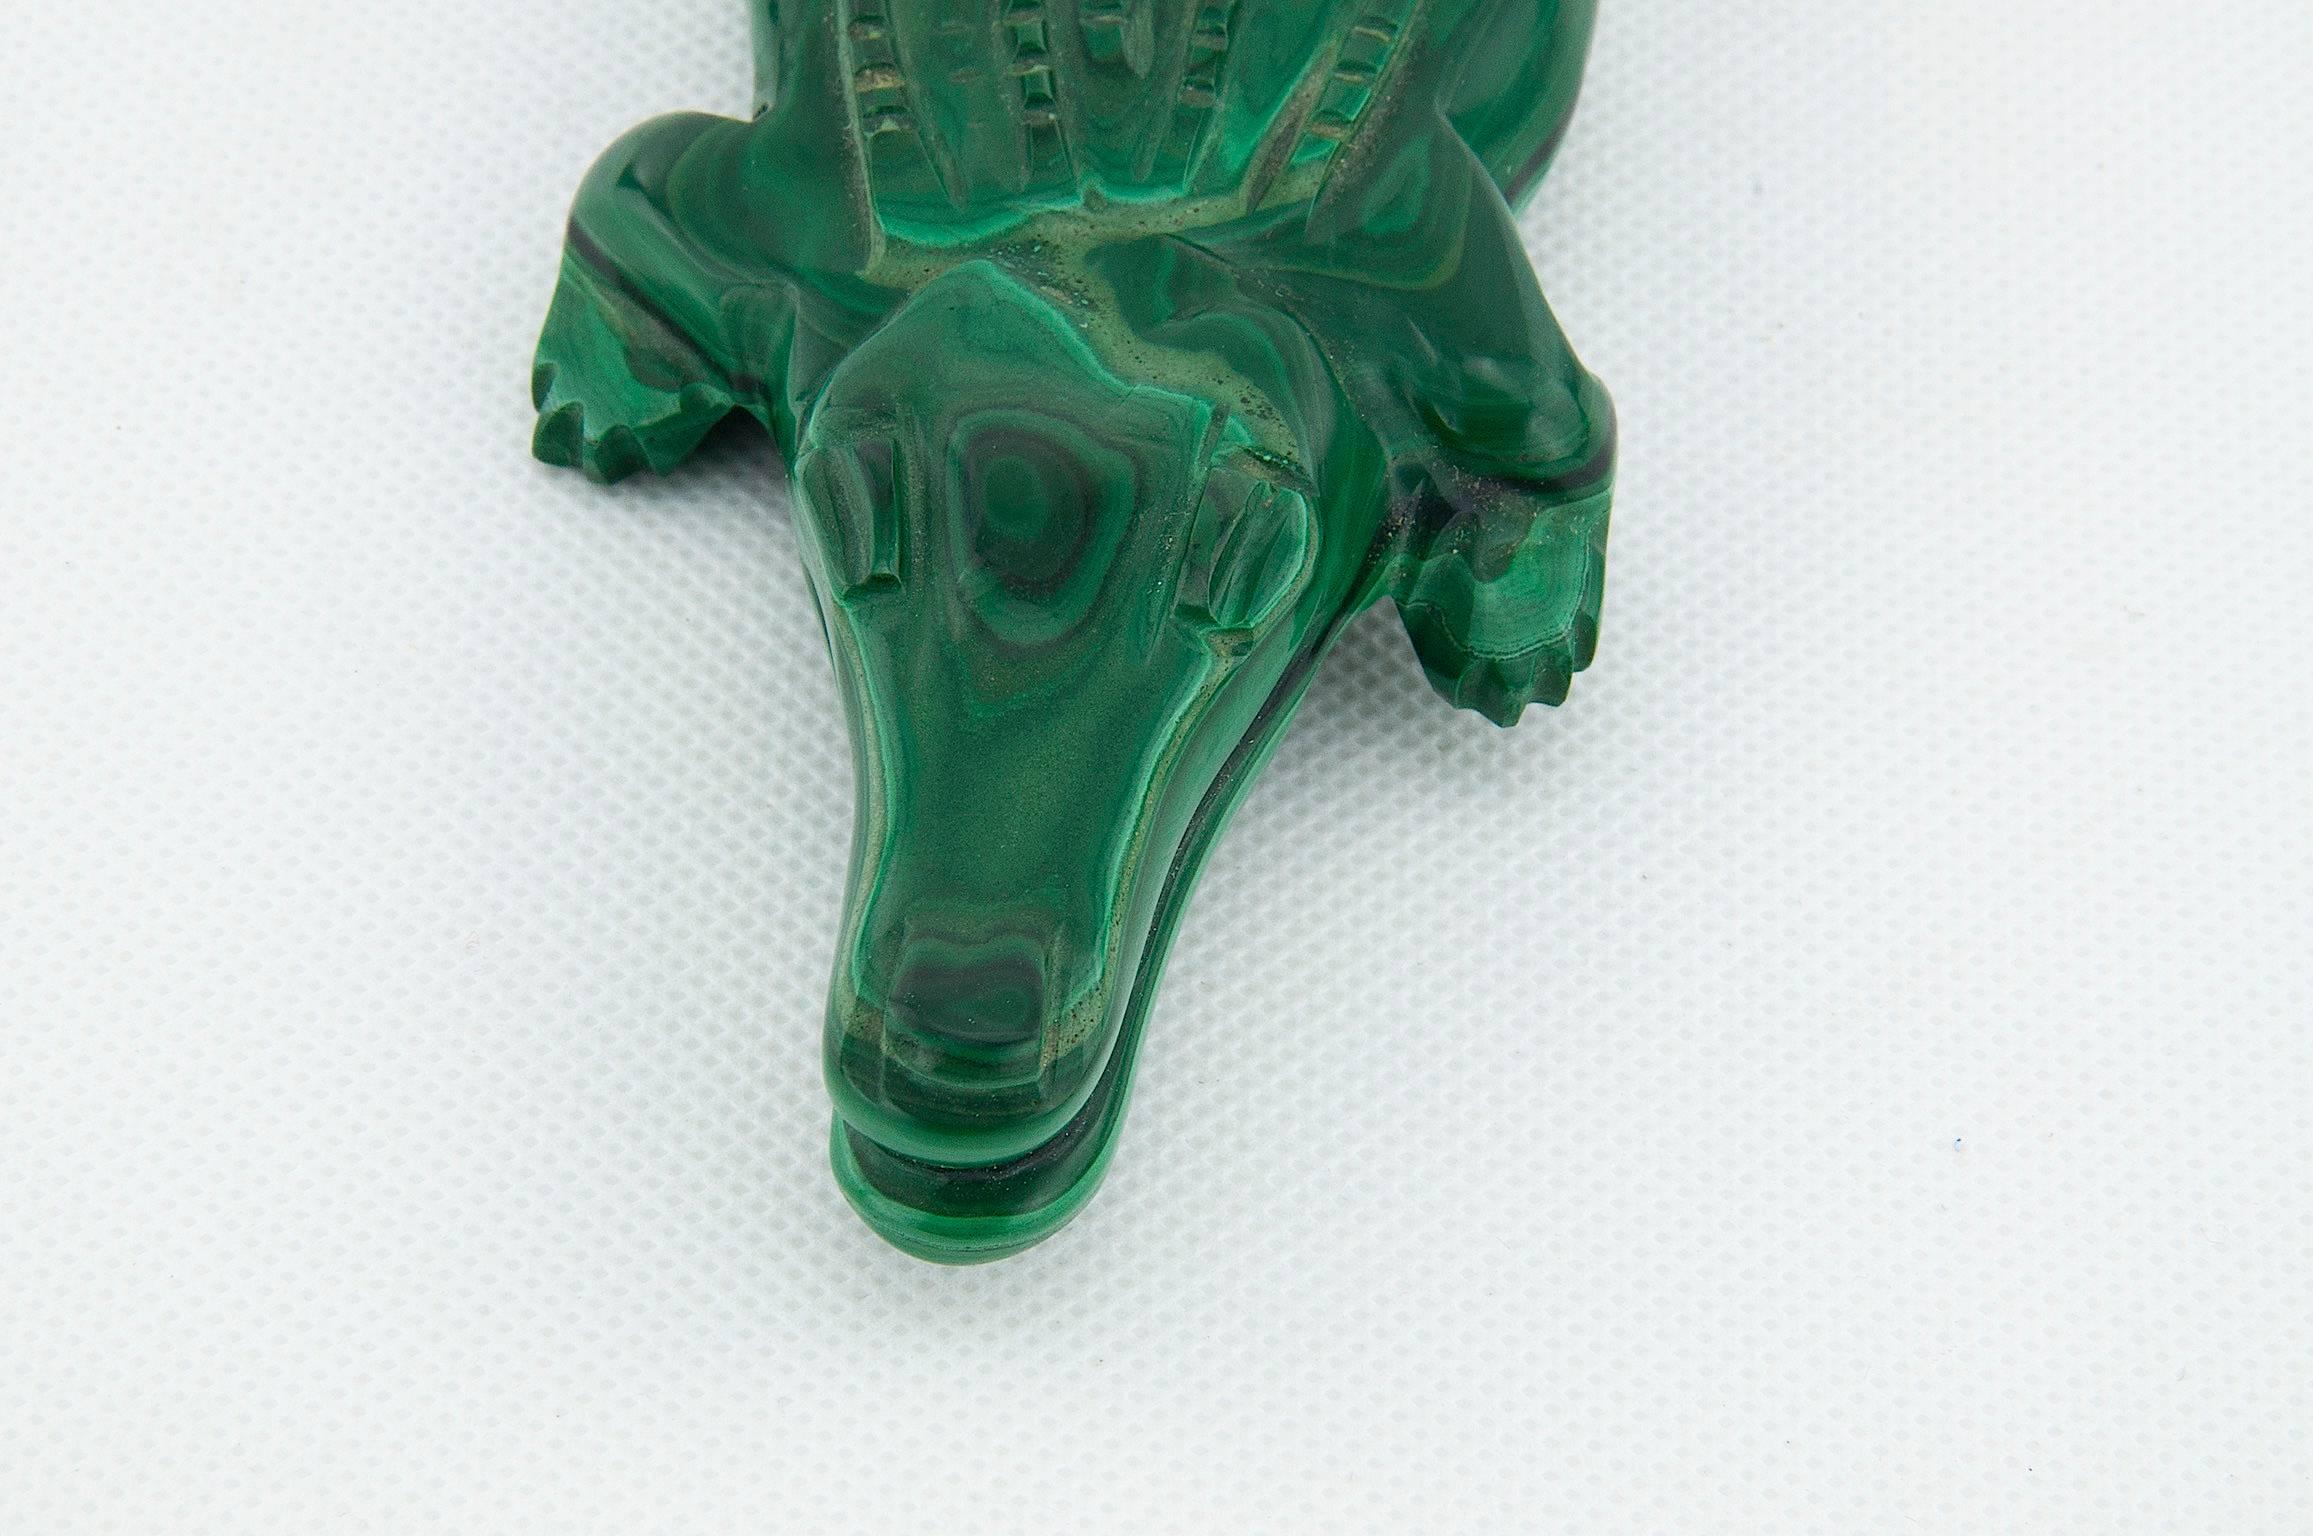 Malachite crocodile sculpture or paperweight.